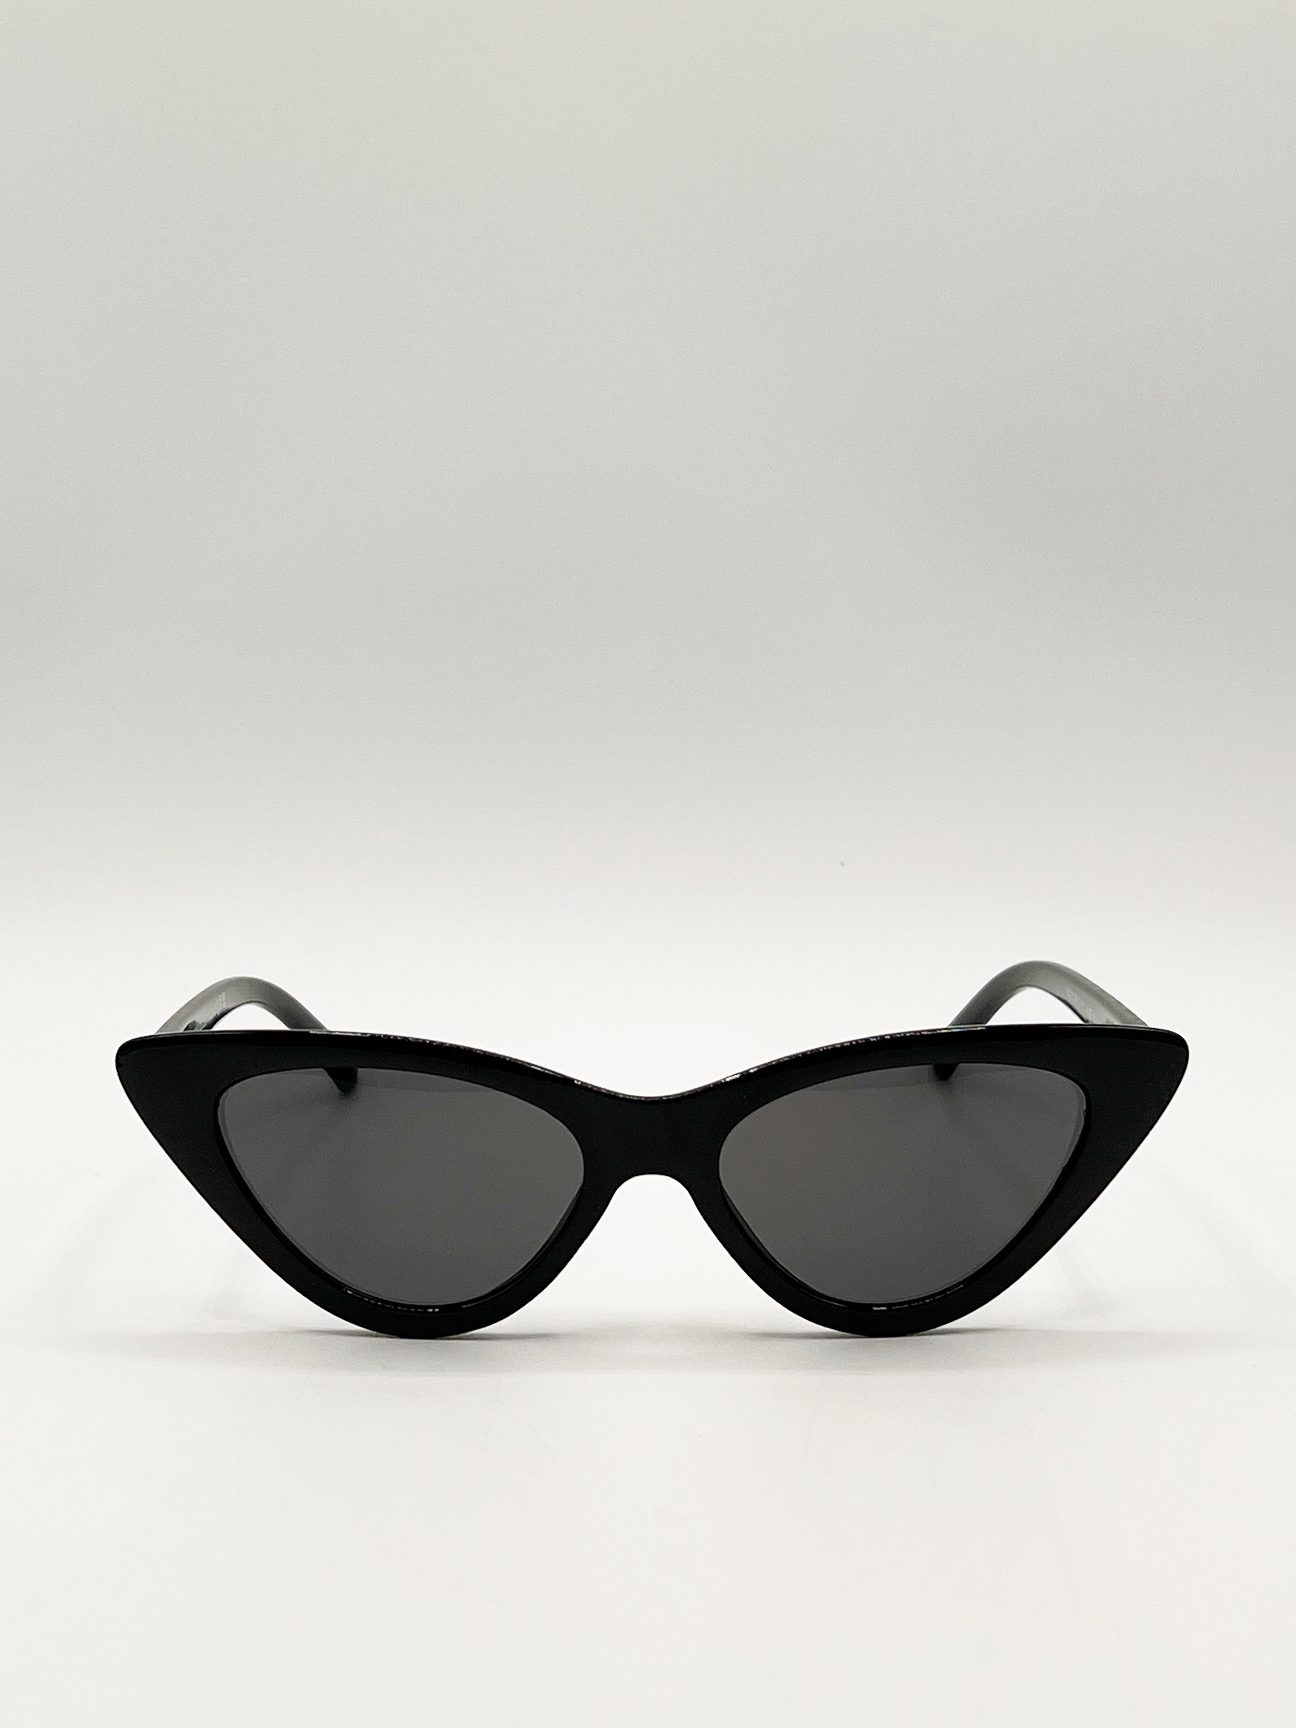 Classic cat eye frame sunglasses